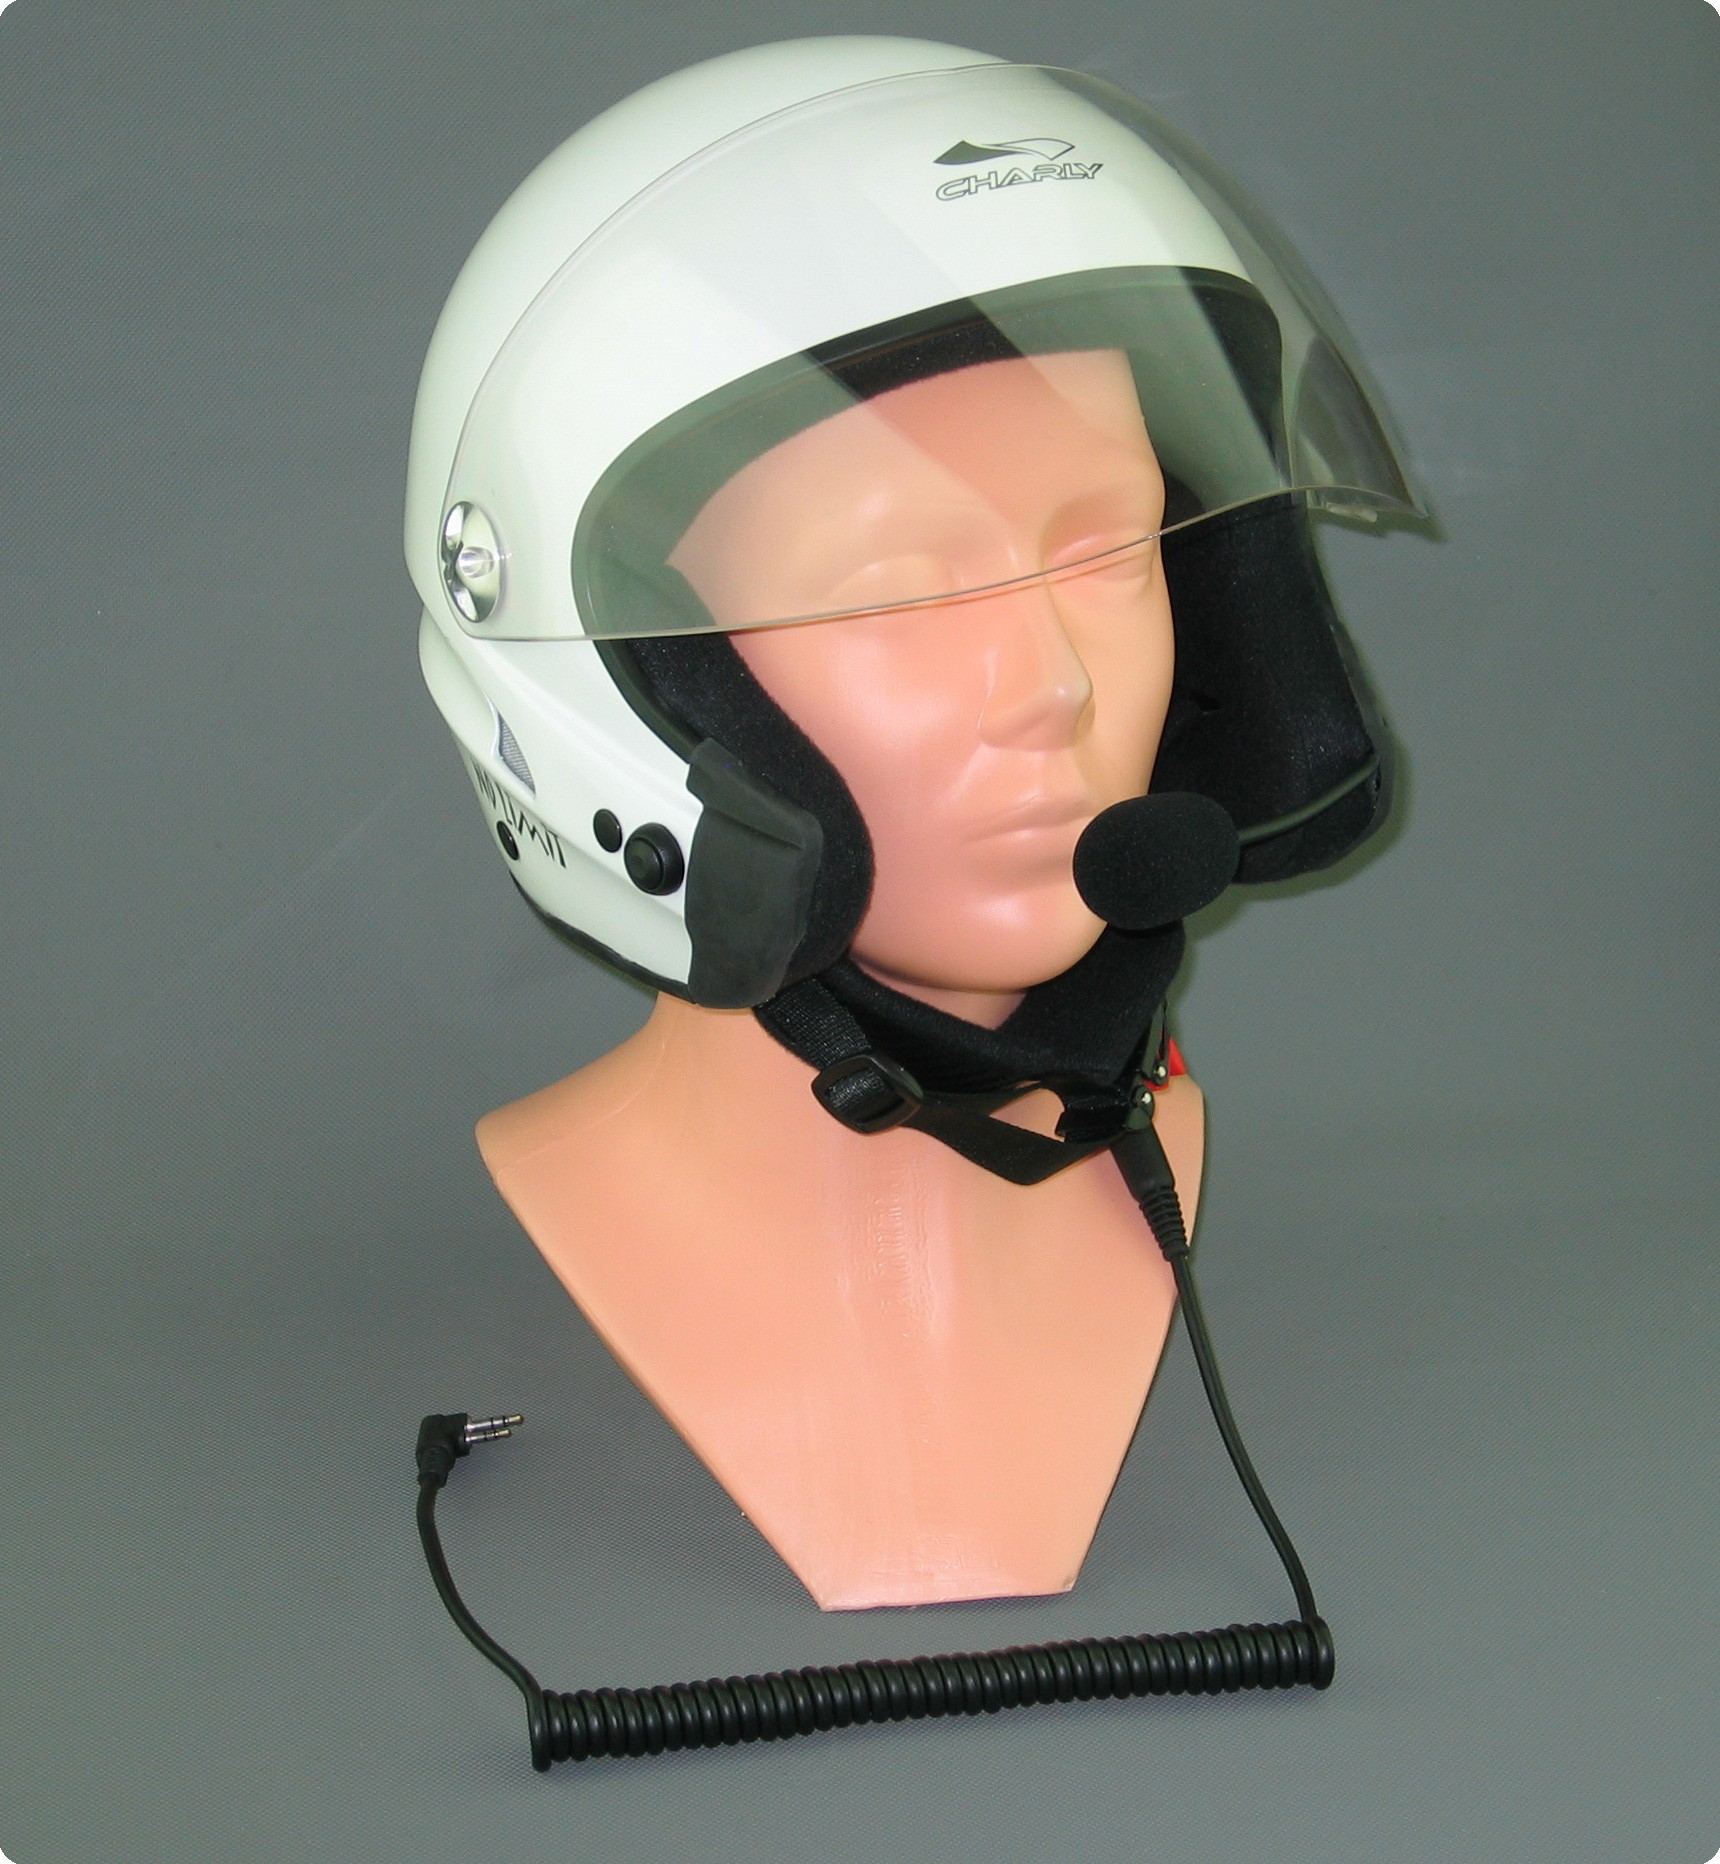 Instalación de auriculares, micrófonos y botón PTT en cascos de aviación